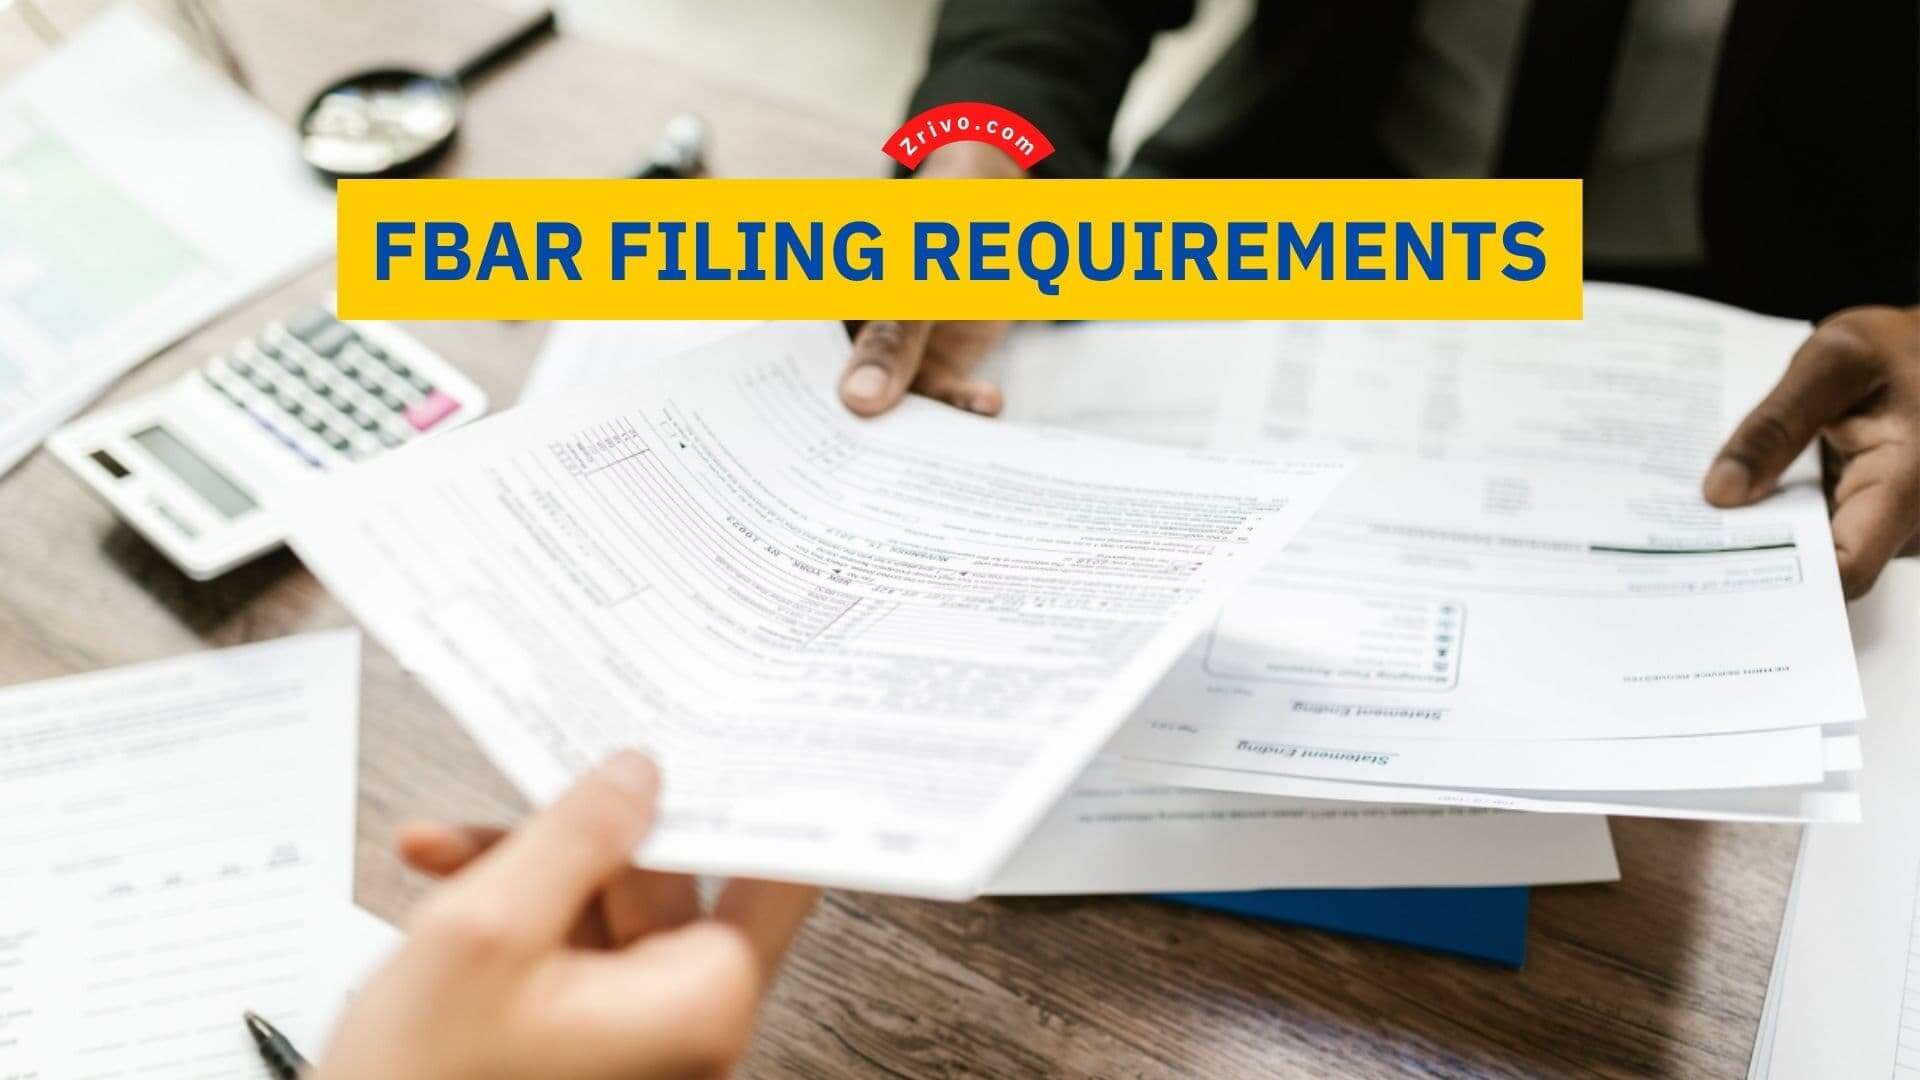 FBAR-Filing-Requirements-Zrivo-Cover-1